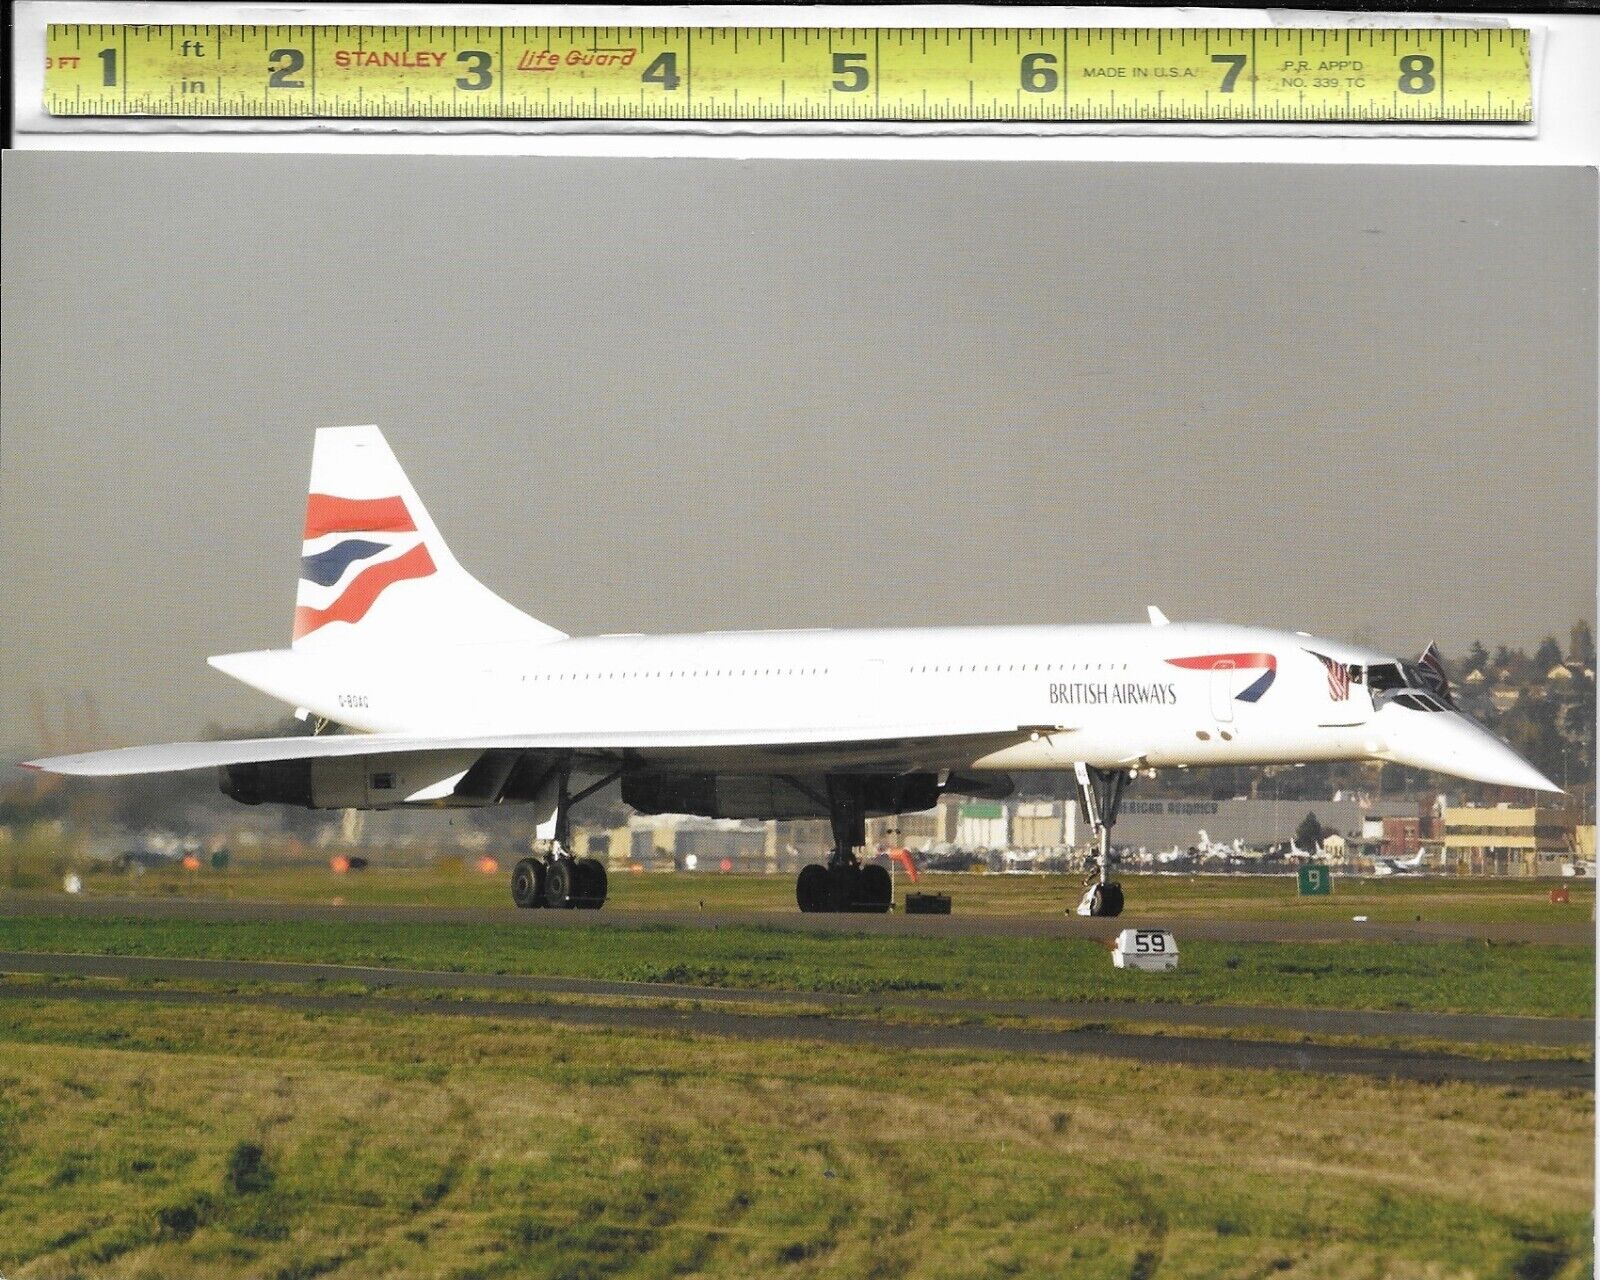 British Airways Concorde Last Taxi-way Large Postcard, US & UK cockpit flags